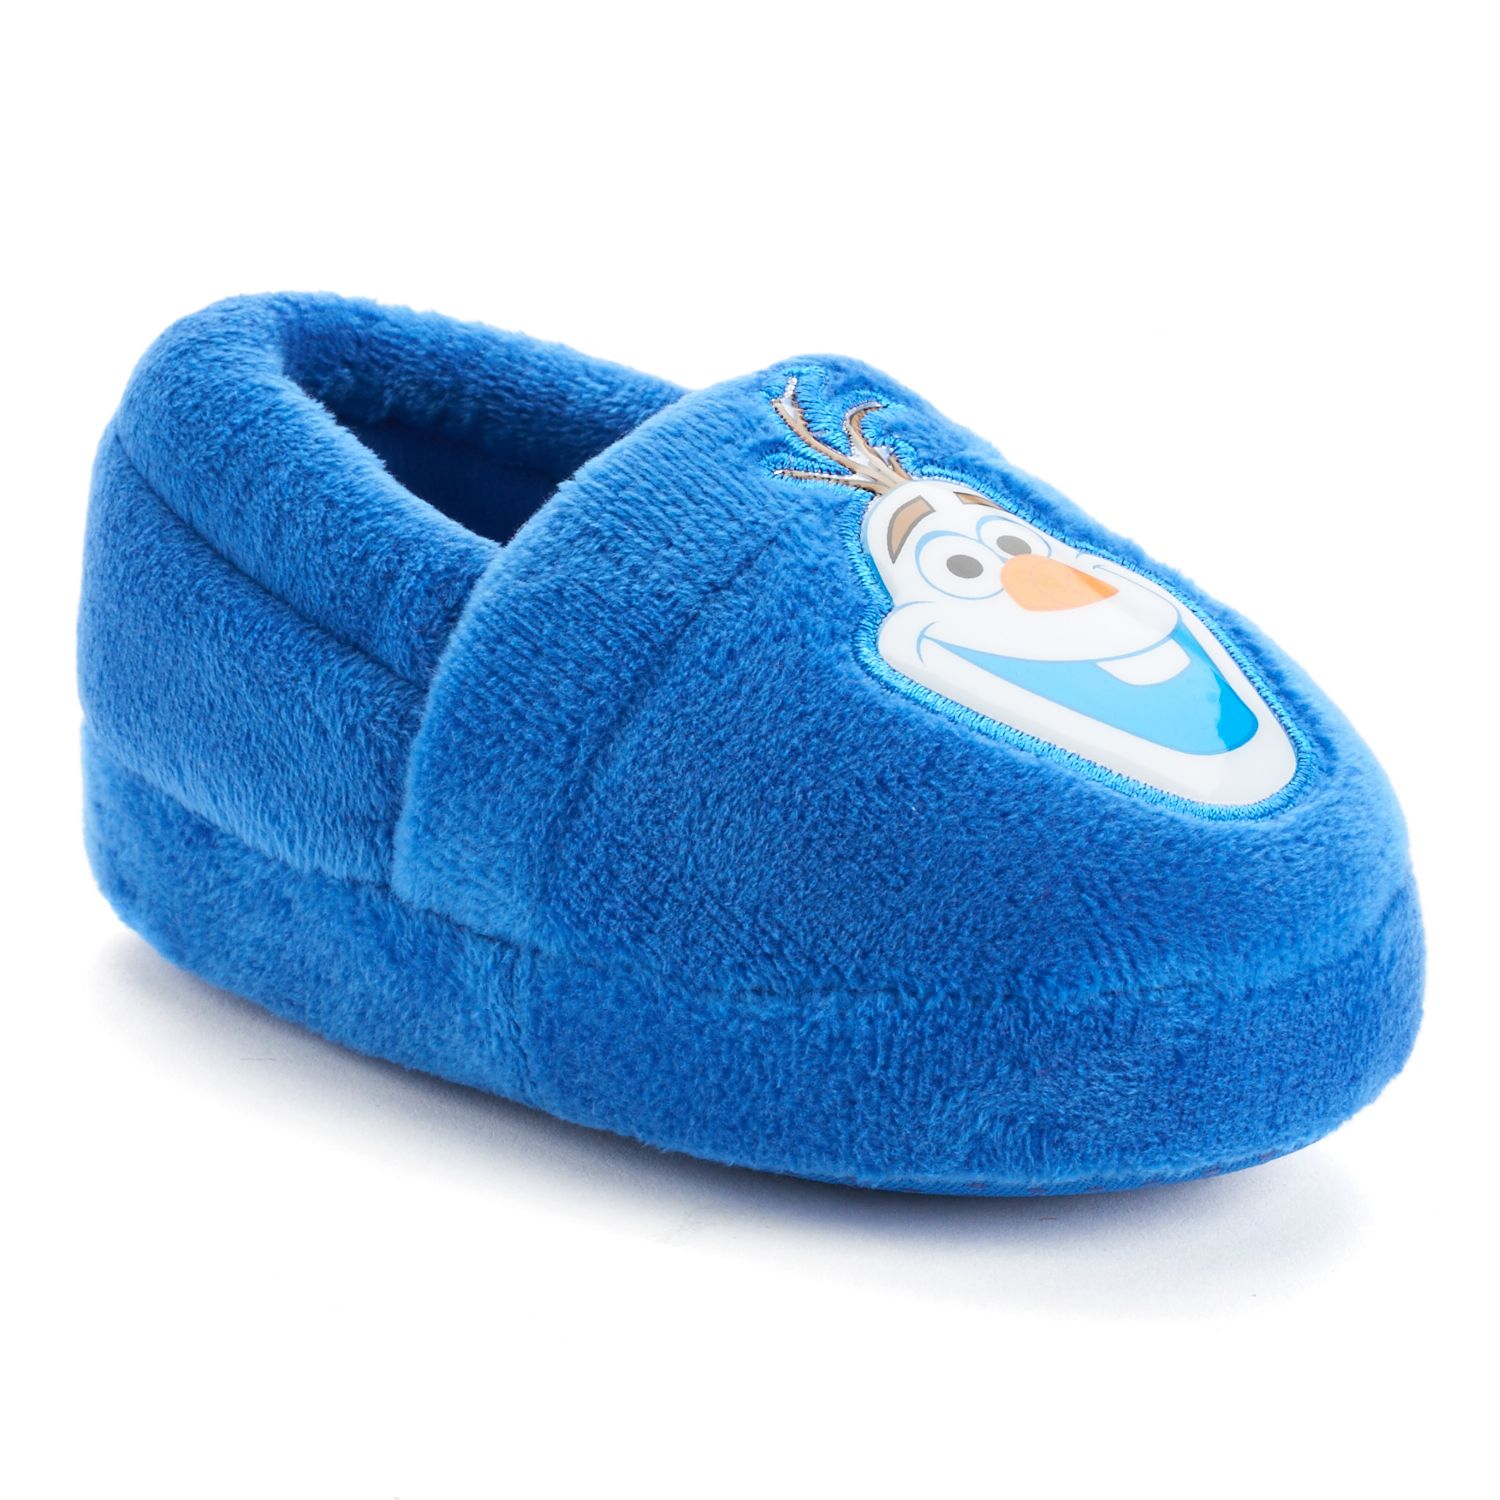 olaf slippers